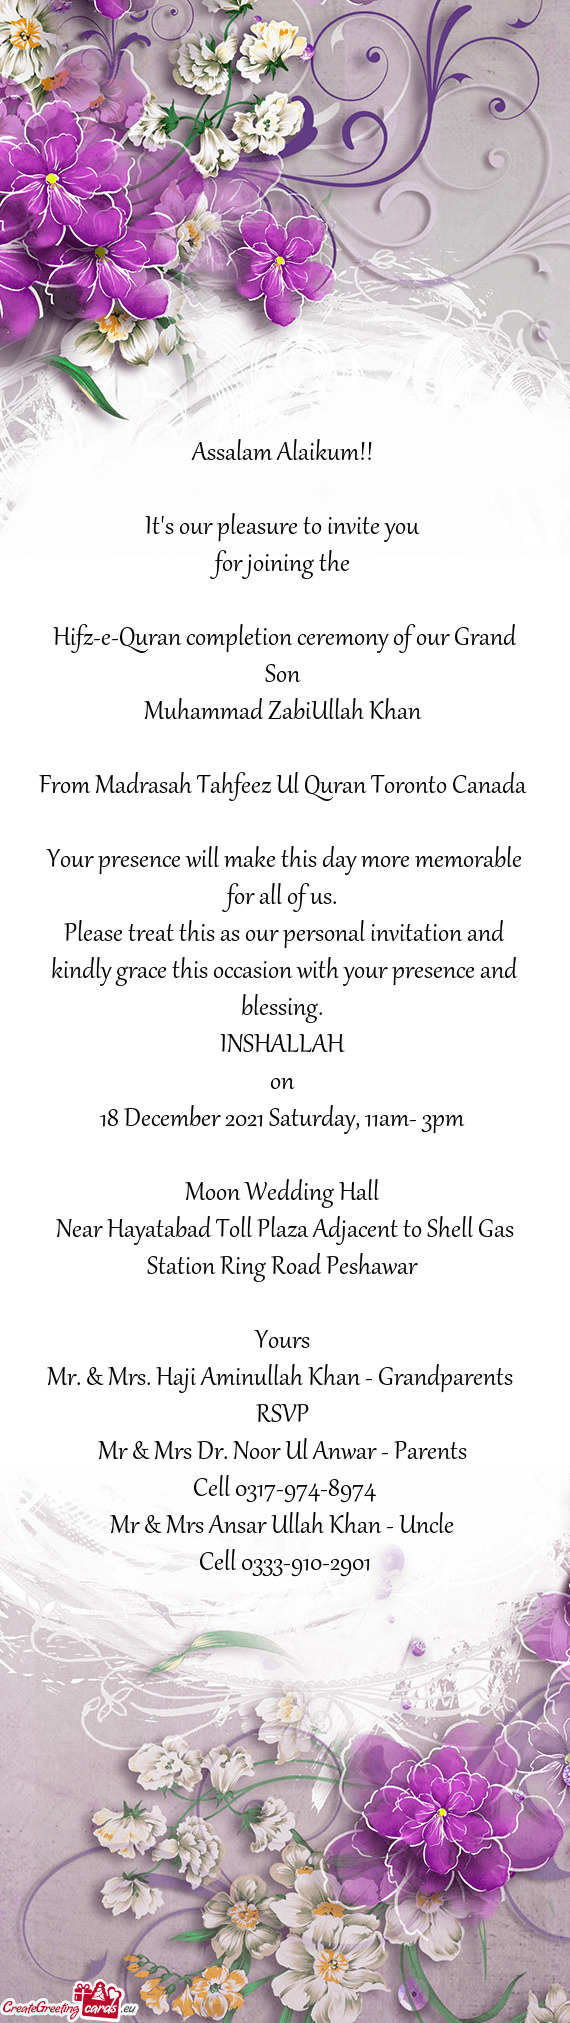 From Madrasah Tahfeez Ul Quran Toronto Canada